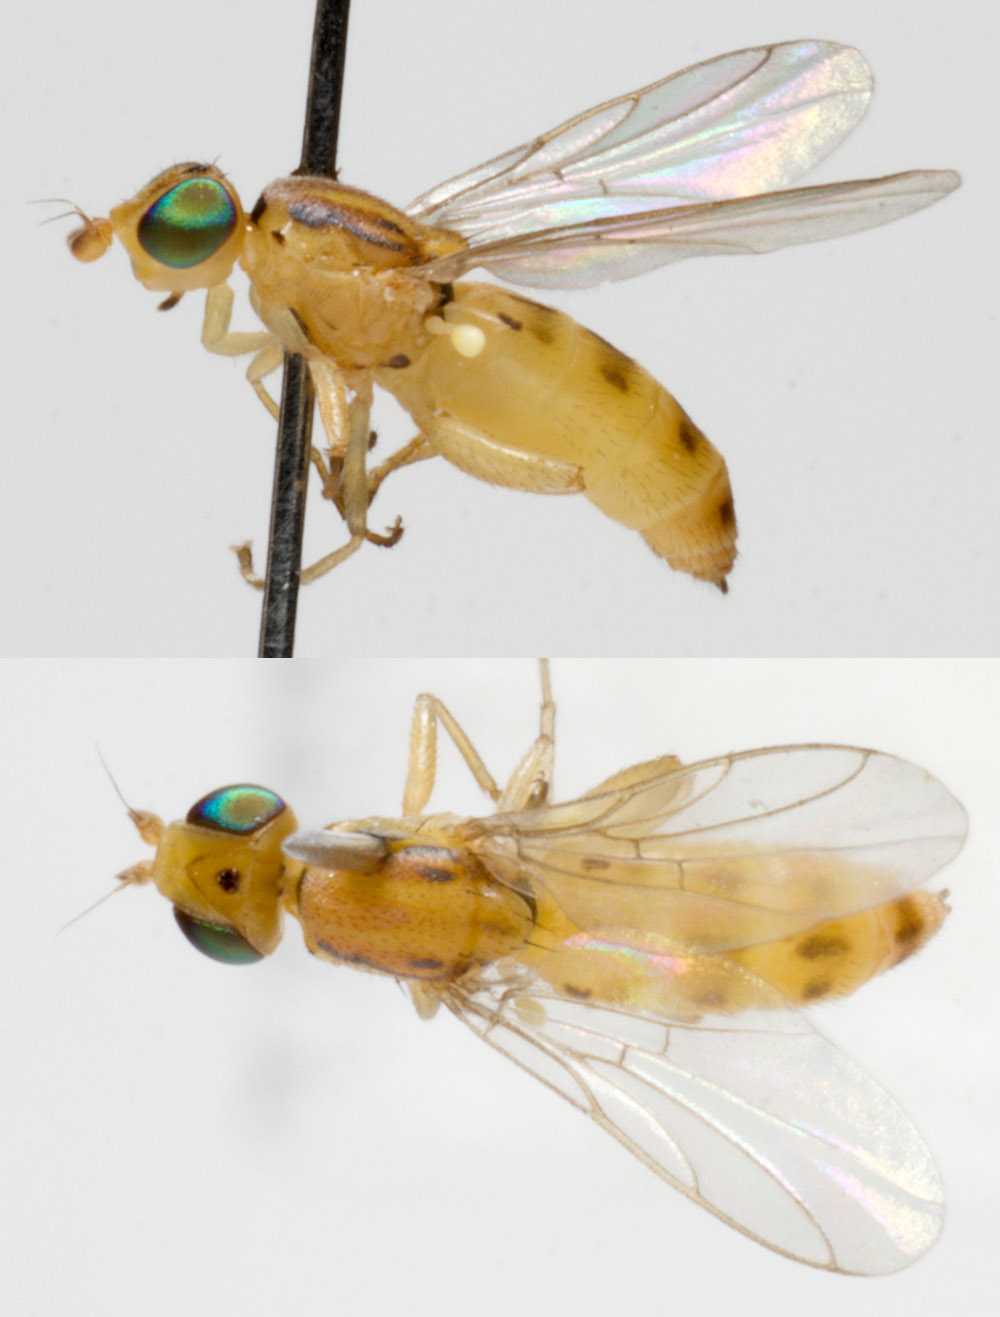 Chloropidae: Meromyza sp. (female) (2)